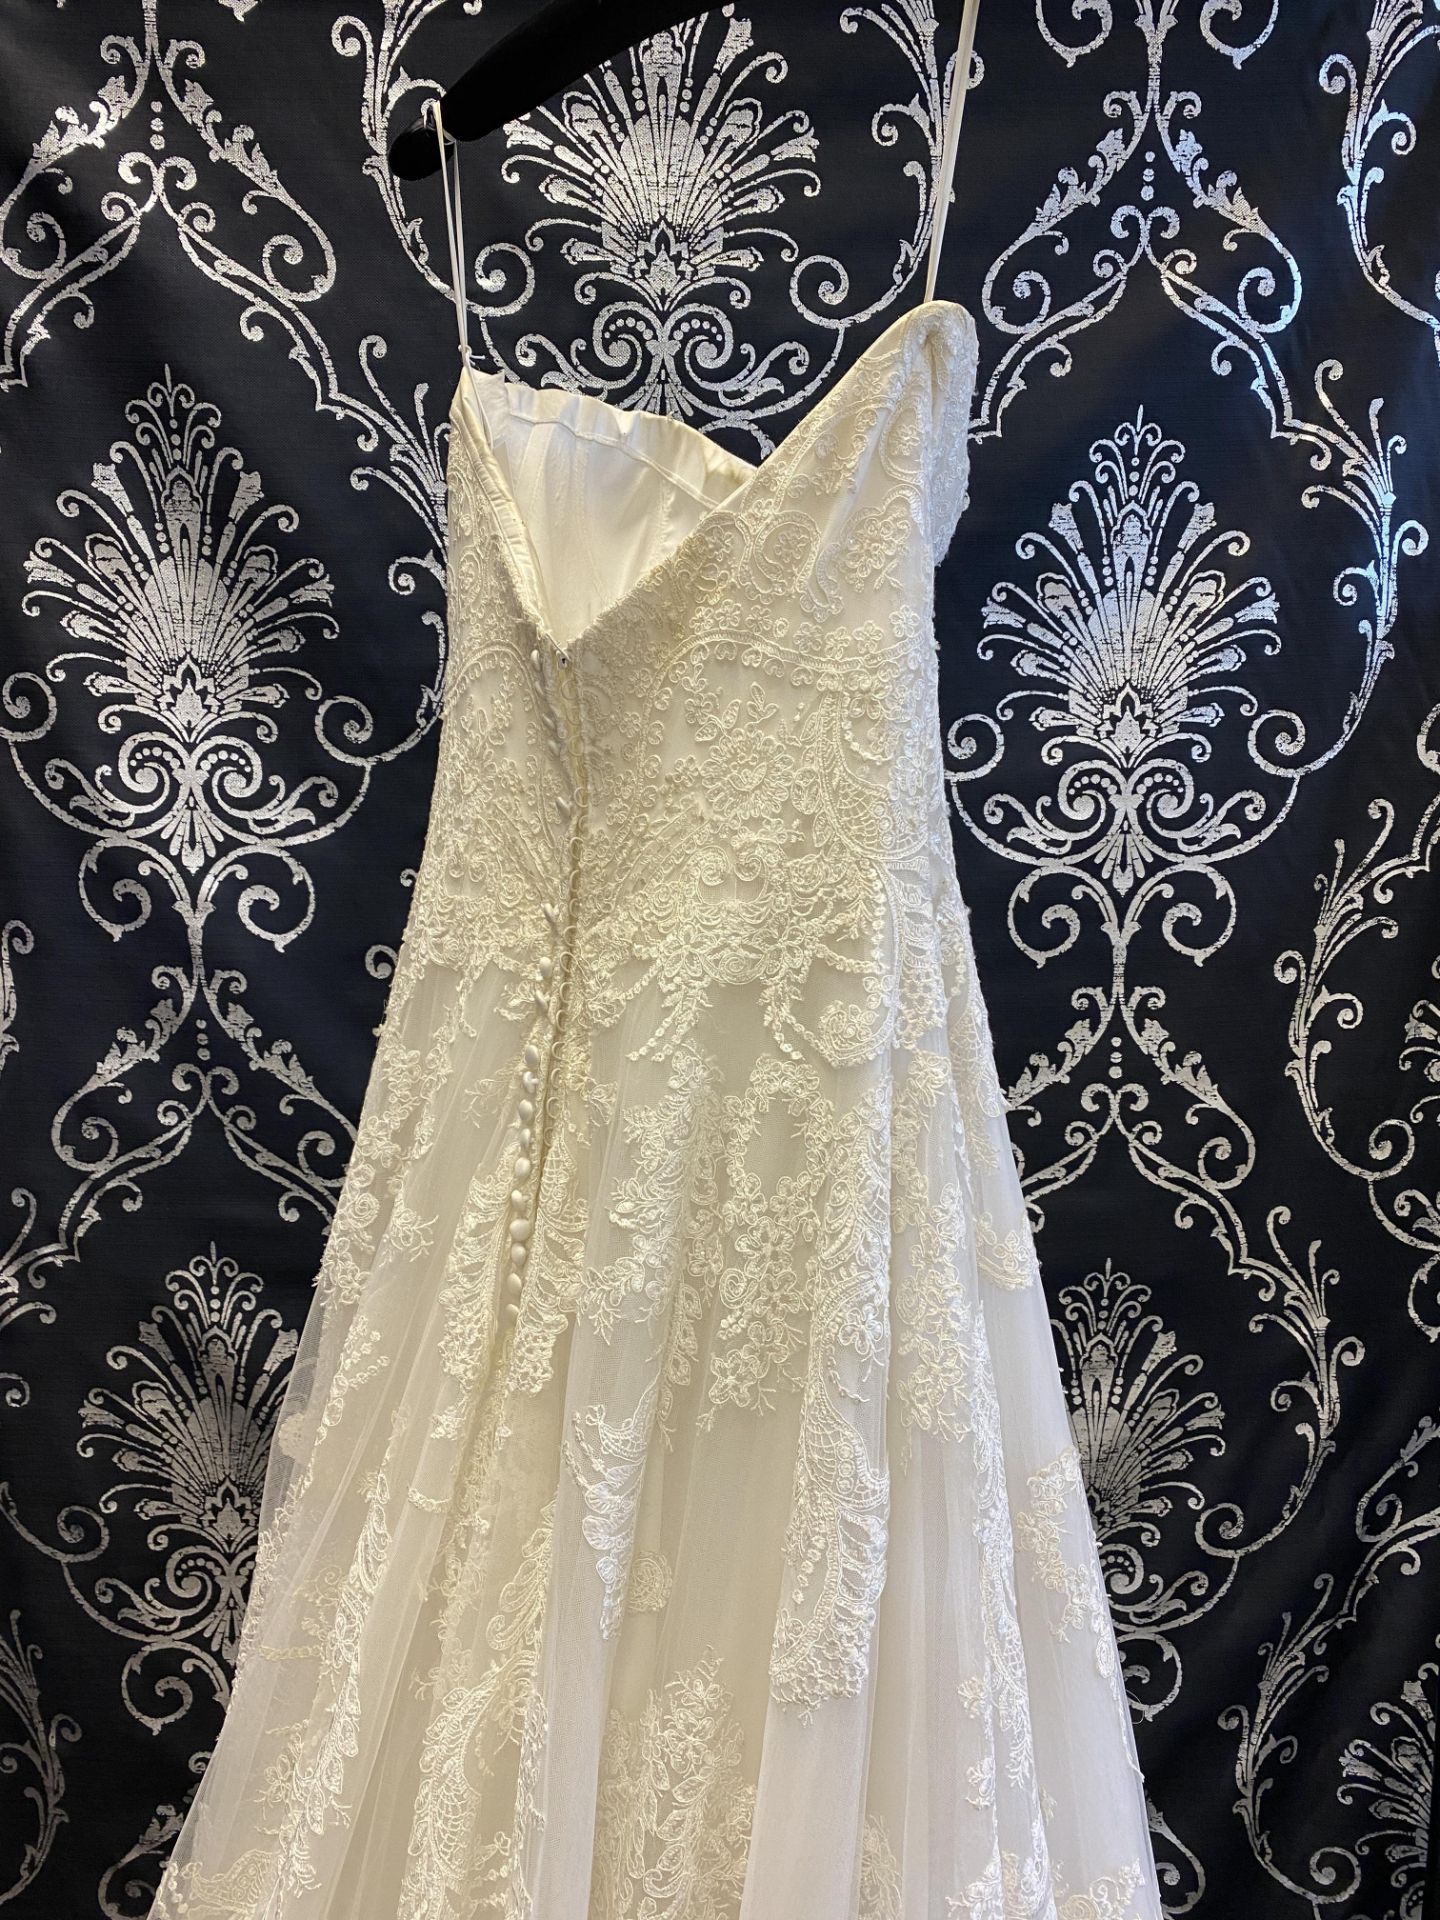 1 x MORI LEE '2787' Stunning Strapless Lace And Chiffon Designer Wedding Dress RRP £1,200 UK 12 - Image 3 of 12